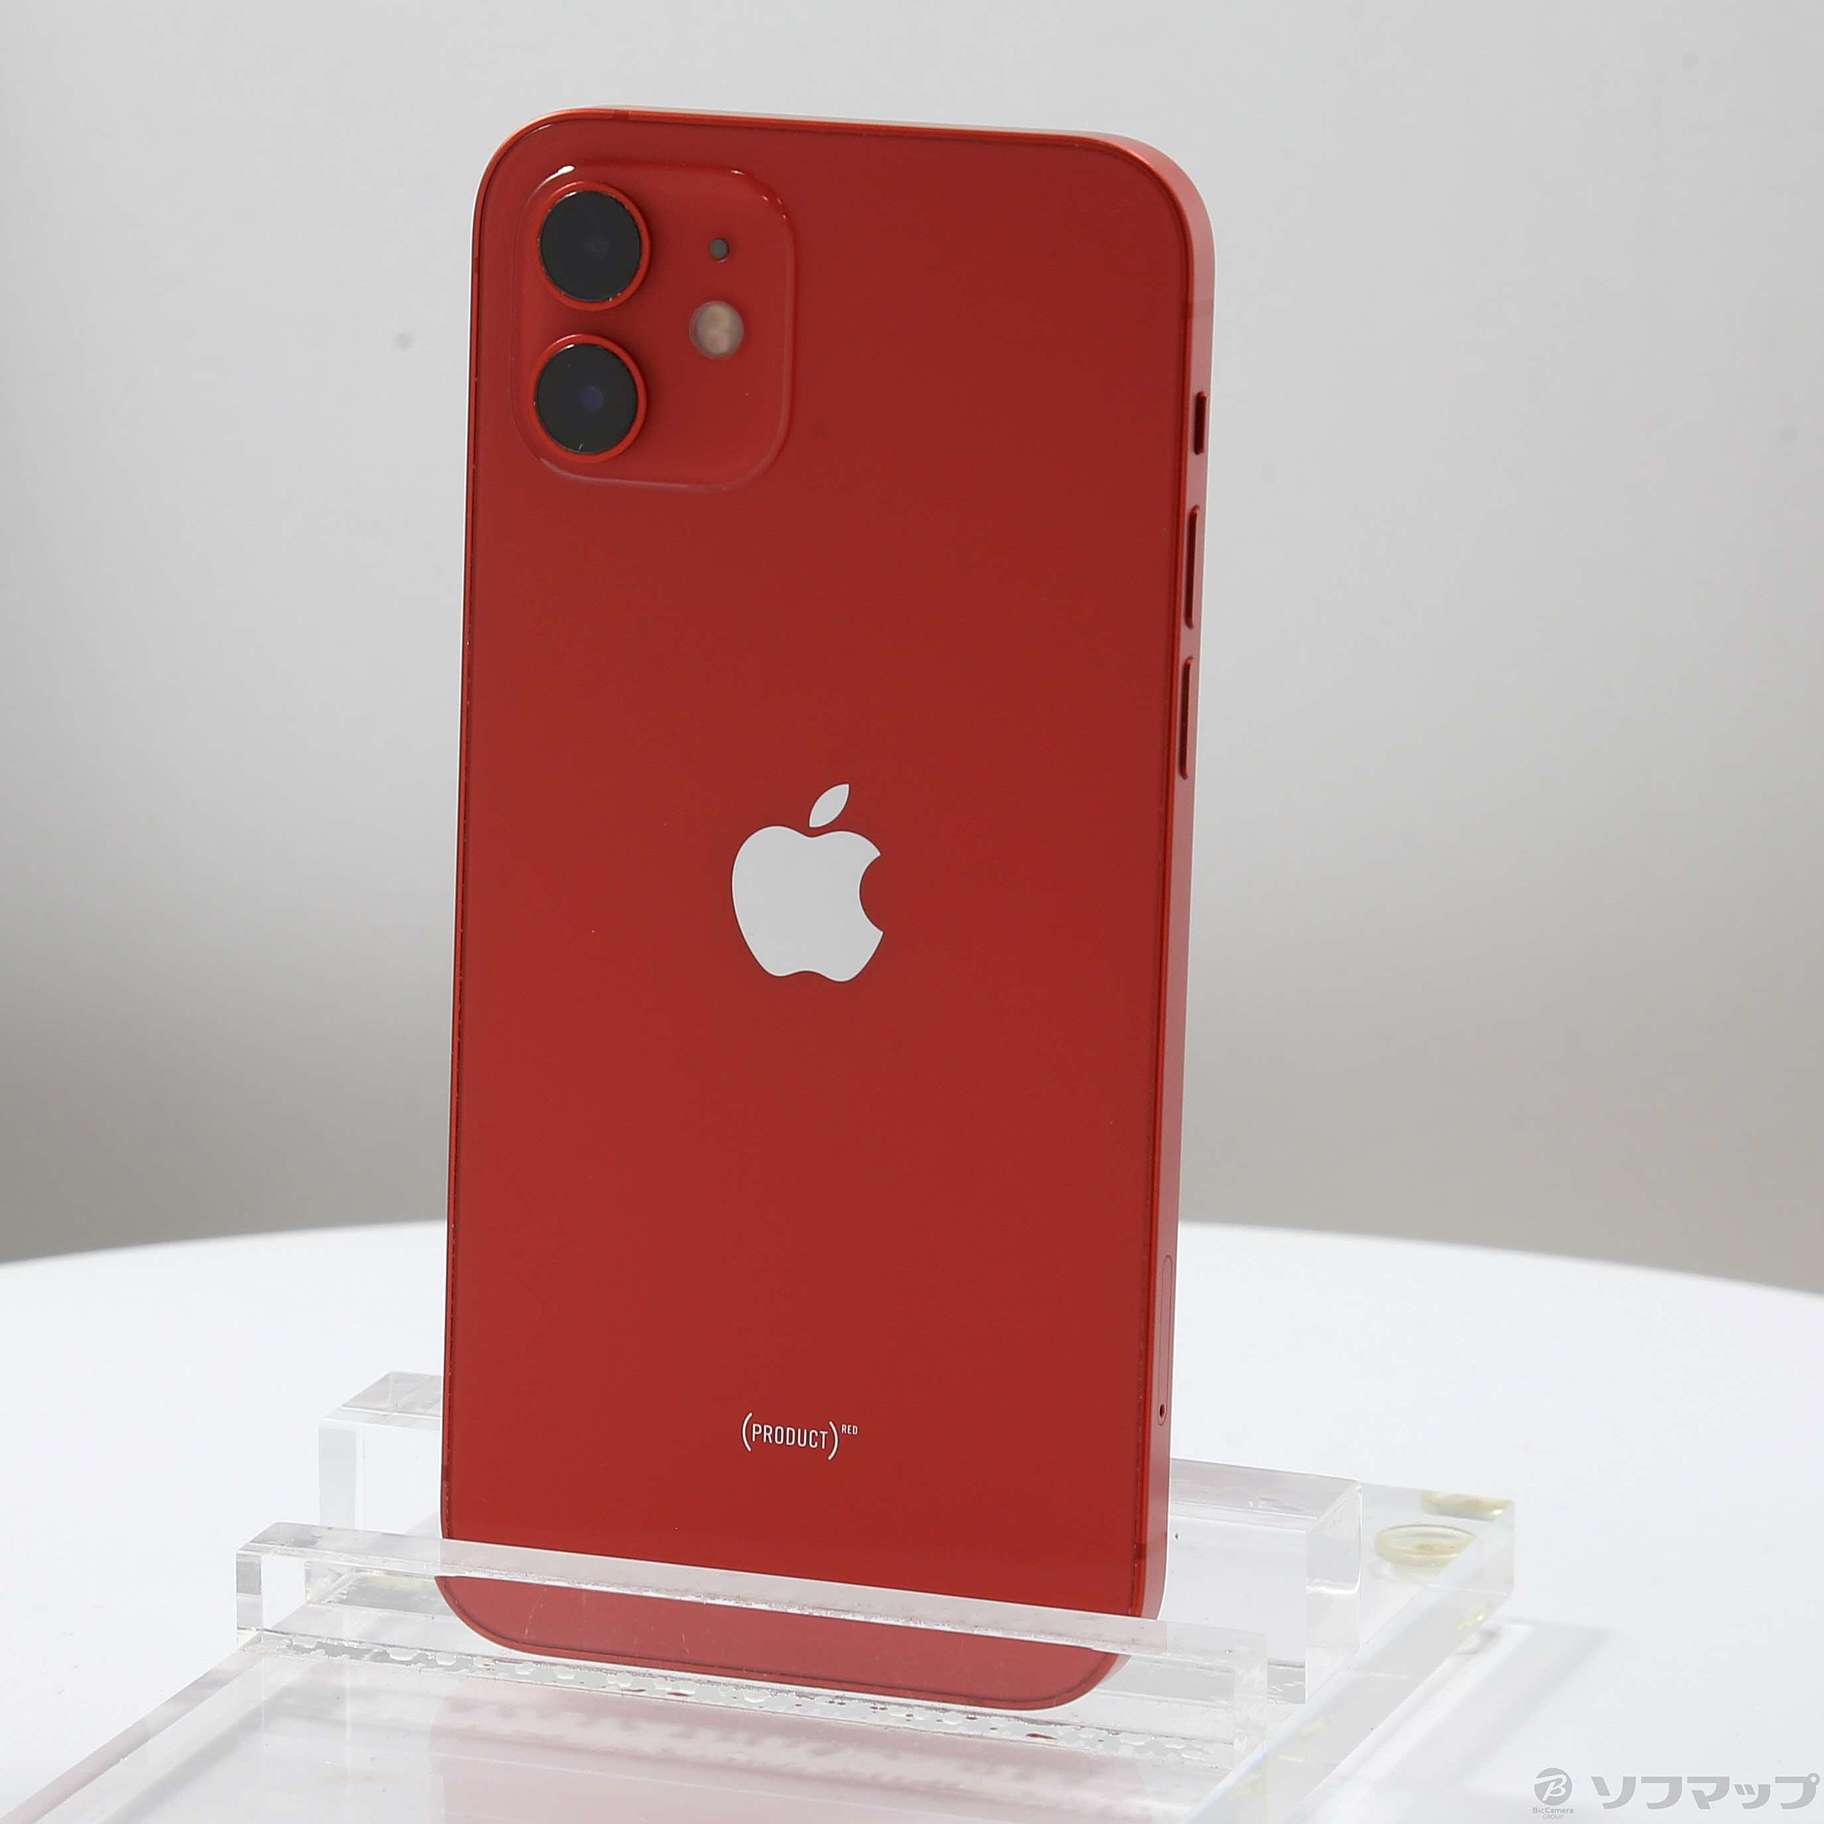 iPhone 12 (PRODUCT)RED 64GB SIMフリー [レッド] 中古(白ロム)価格 